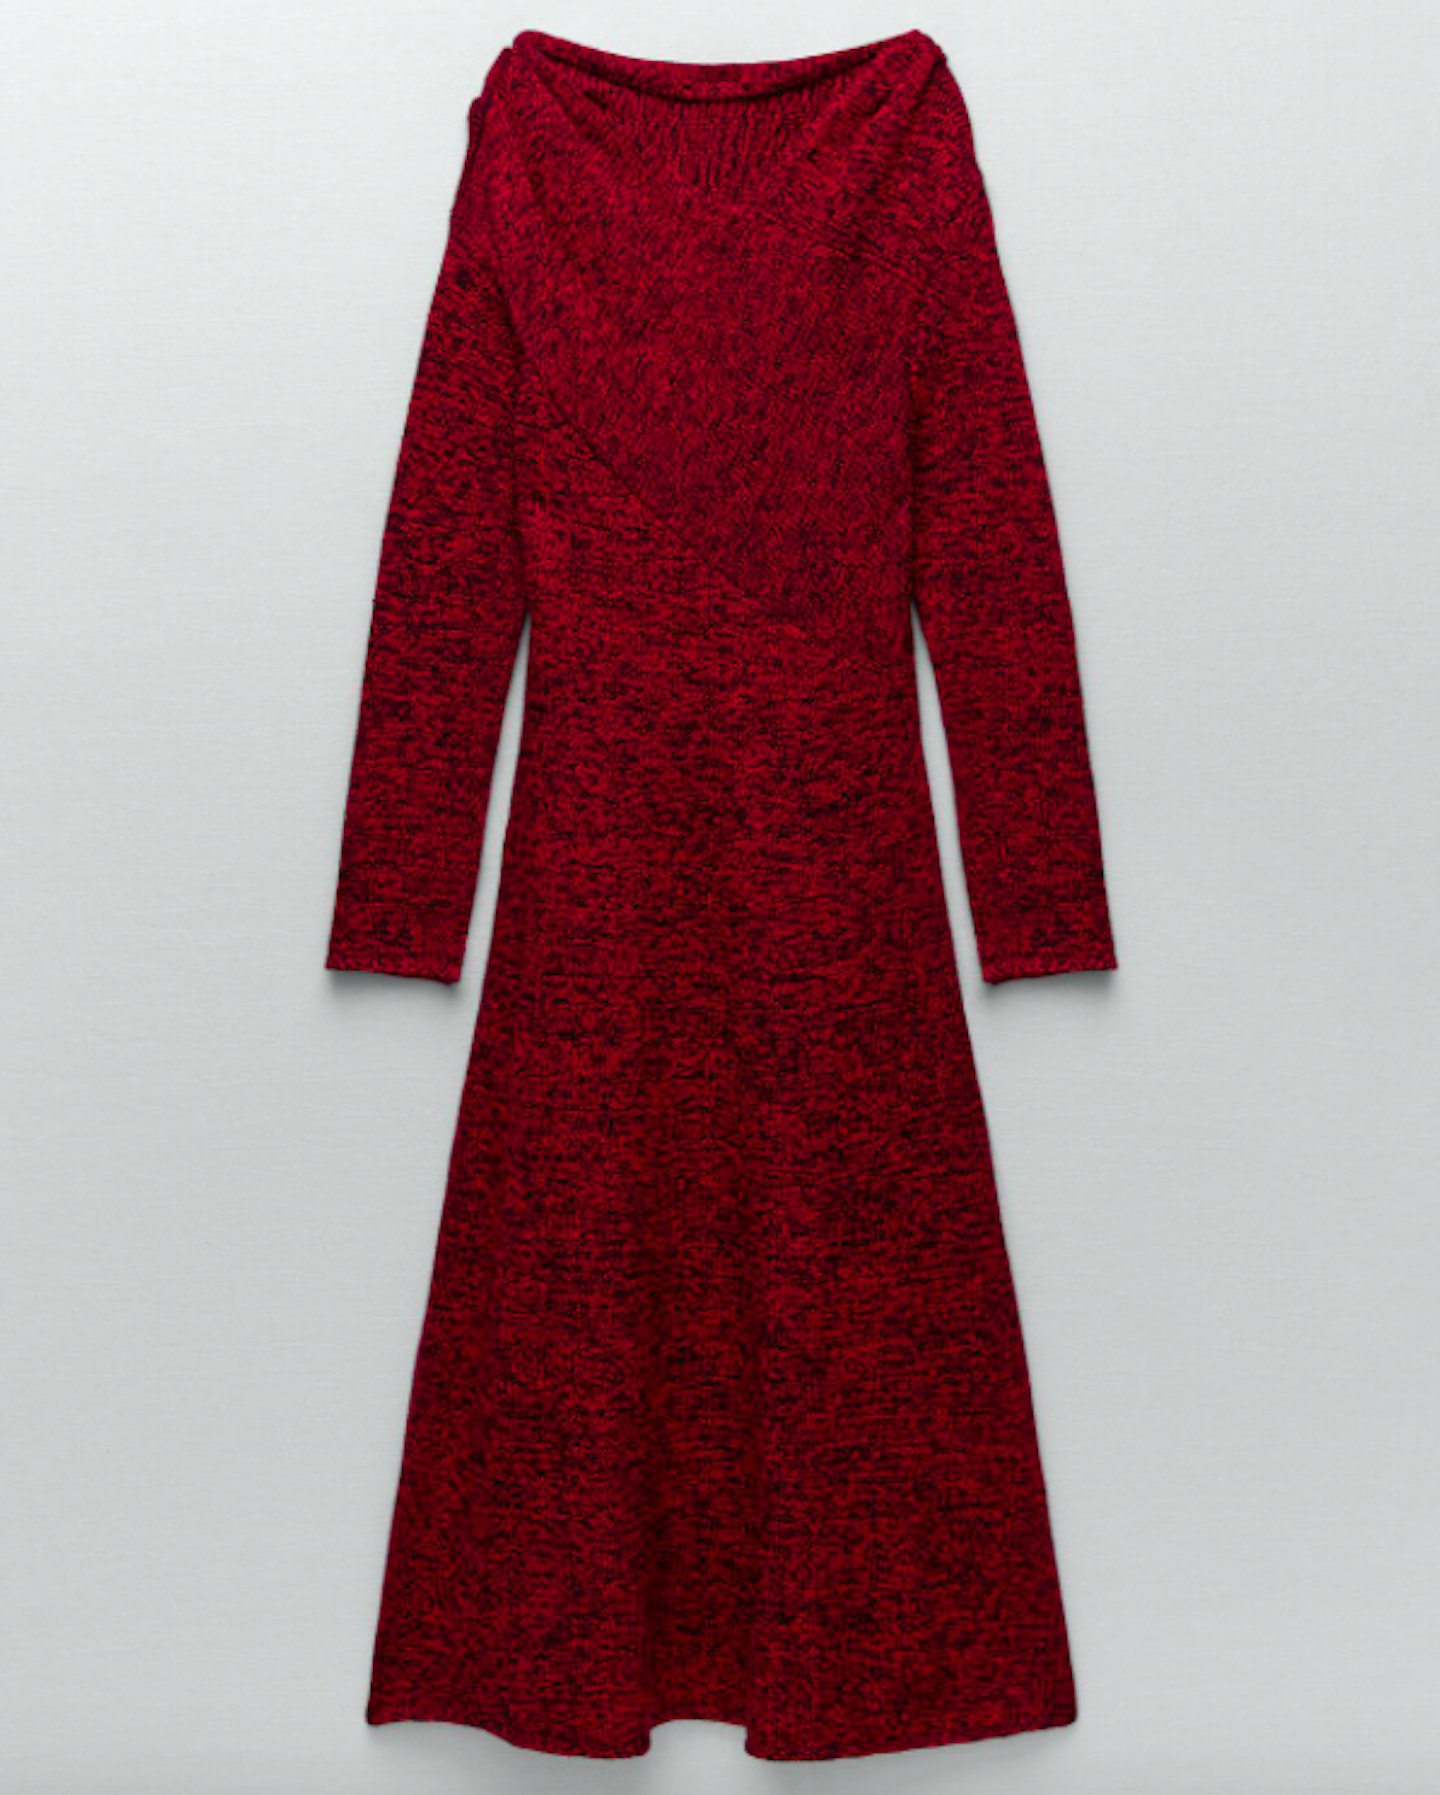 Zara, Knit Dress With Gathered Shoulders, £59.99